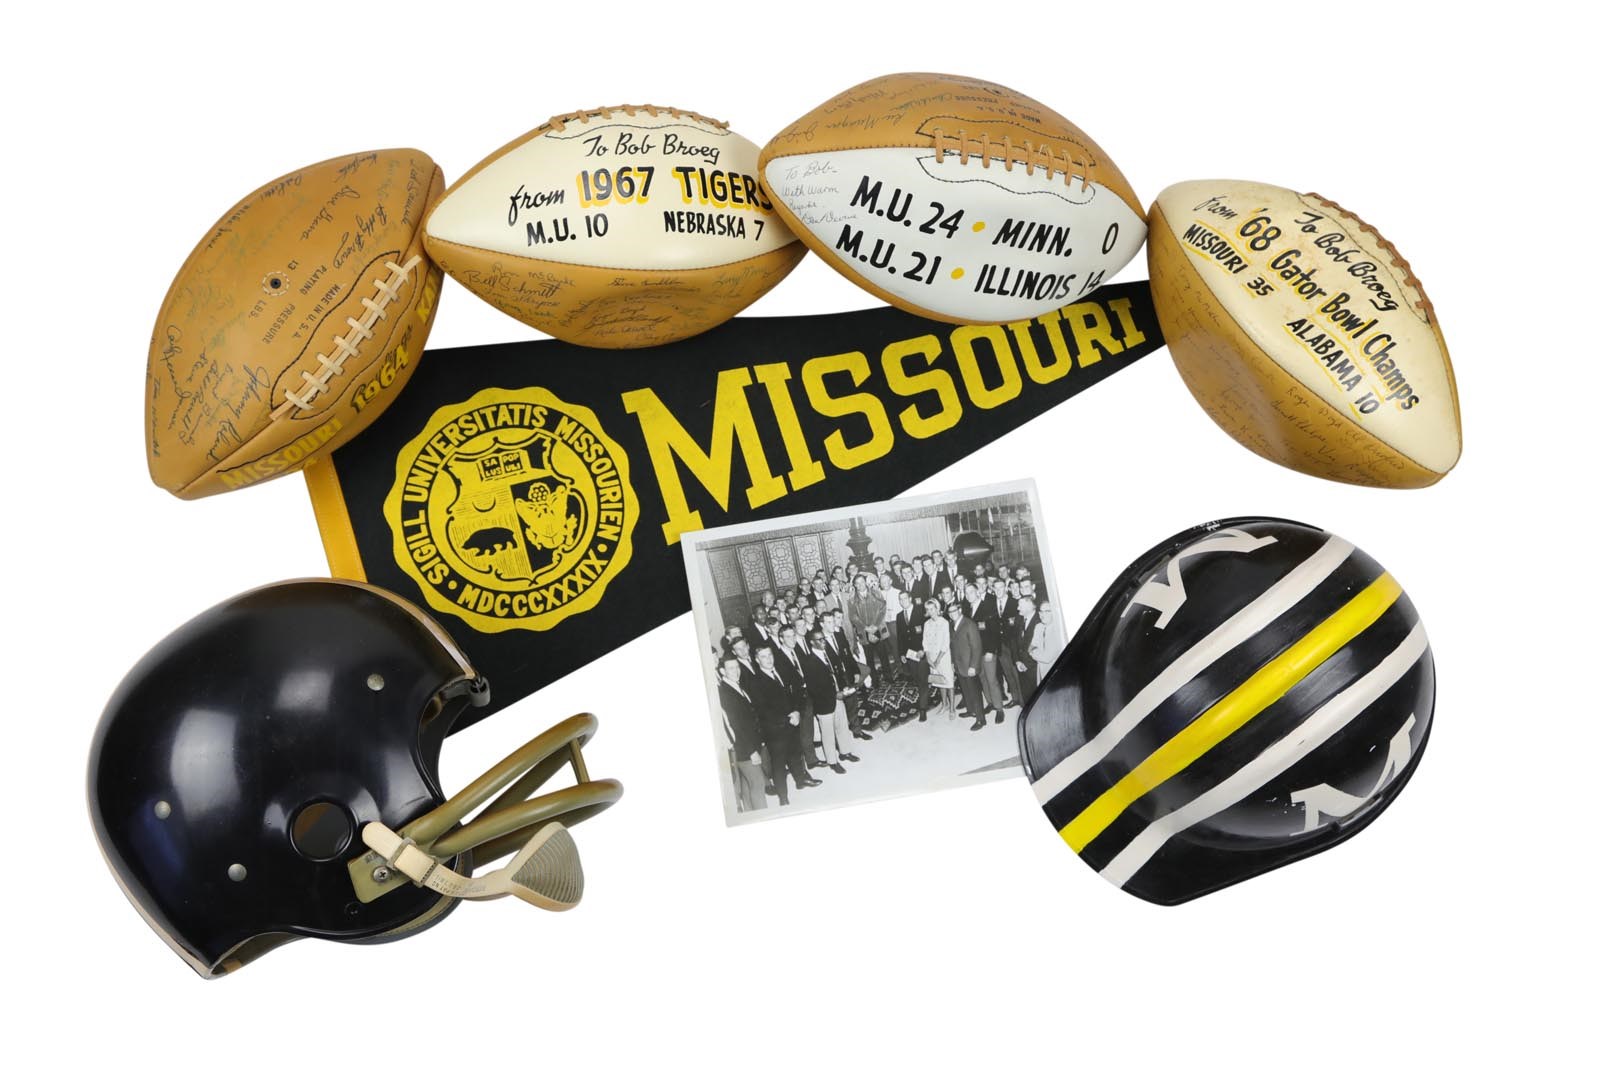 - 1960's U of Missouri Football Collection (8) From Sports Writer Bob Broeg